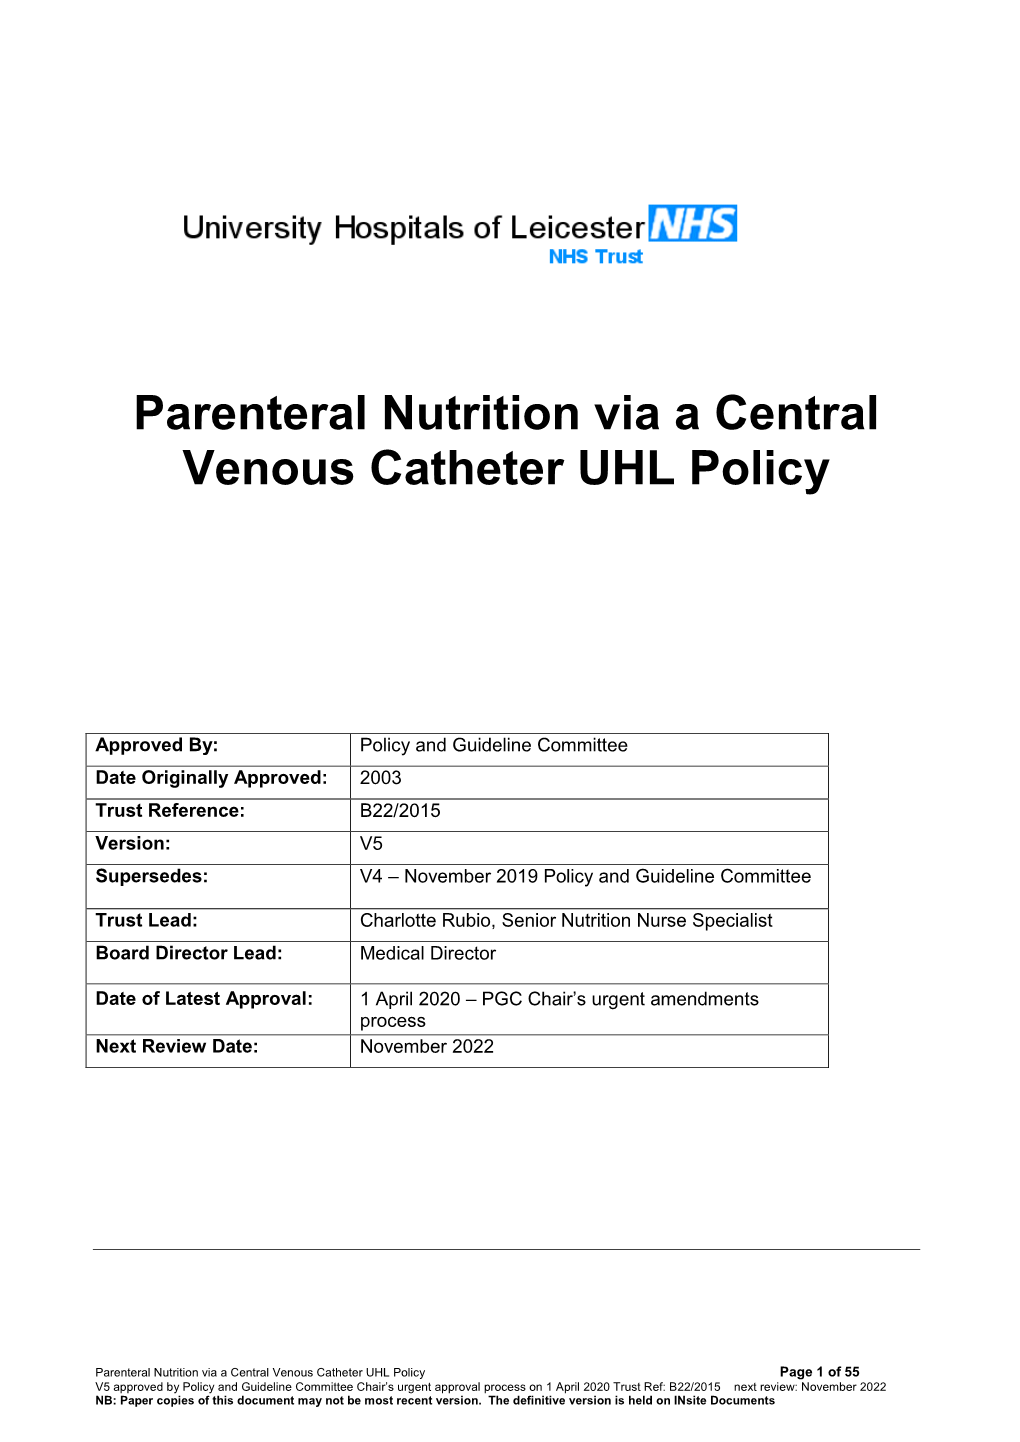 Parenteral Nutrition Via a Central Venous Catheter UHL Policy